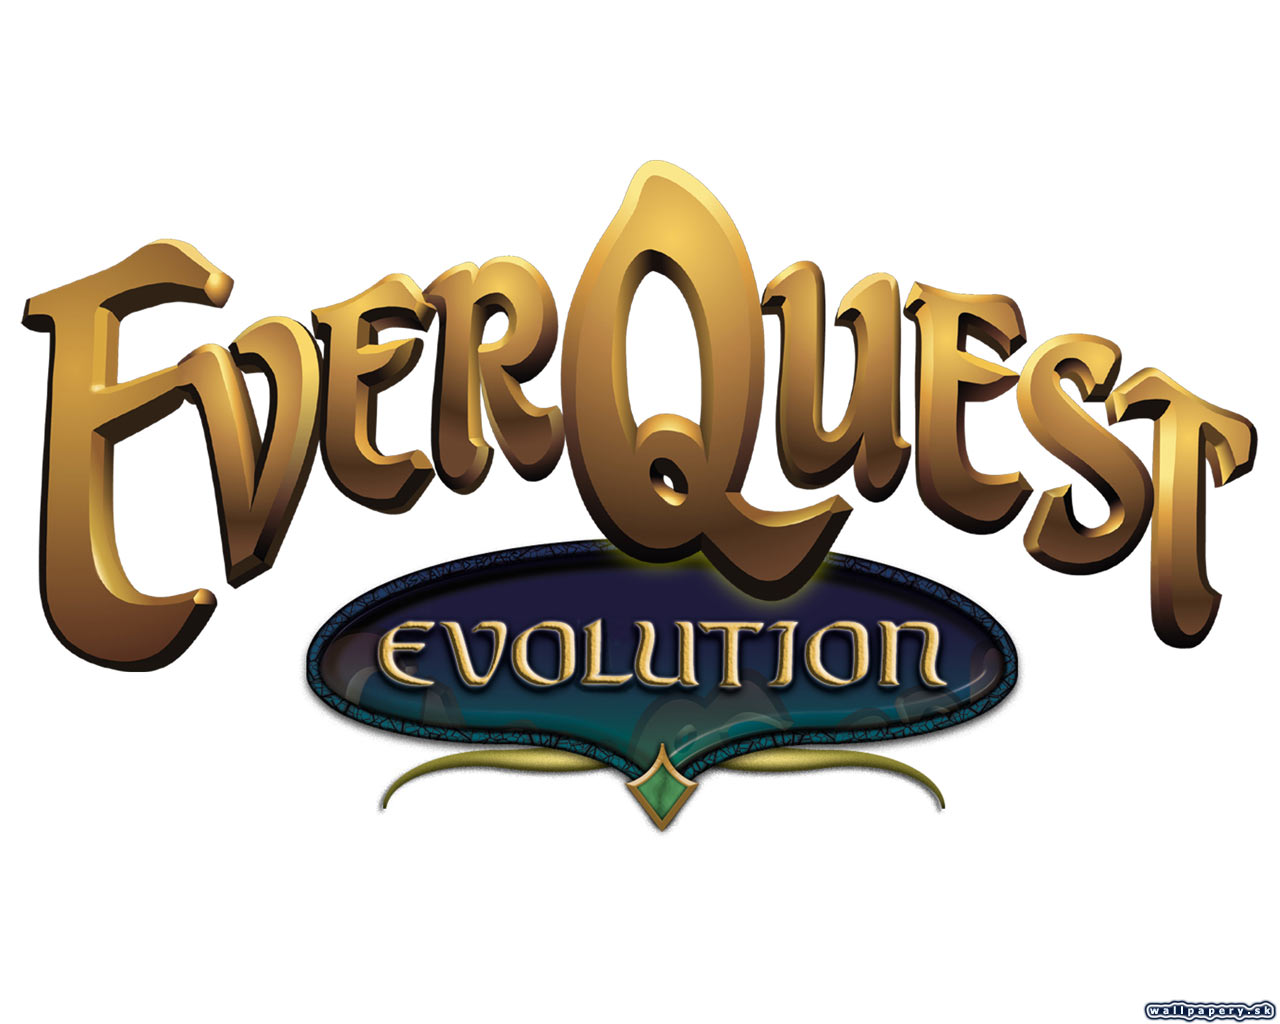 EverQuest: Evolution - wallpaper 2